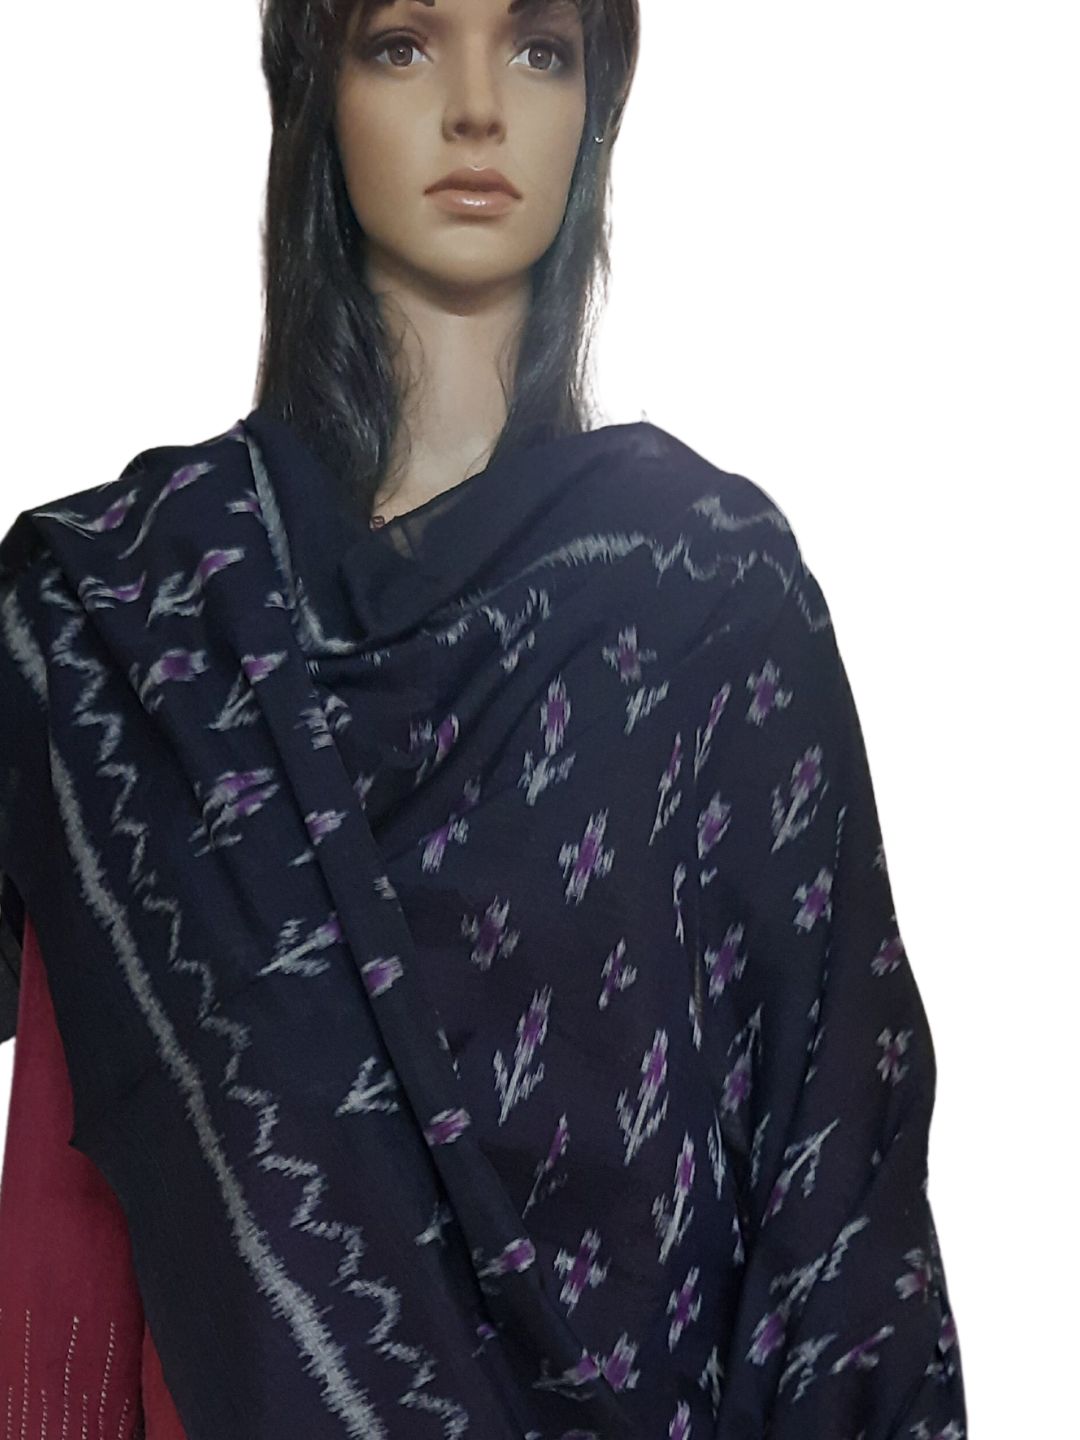 Black Cotton ikat Dupatta with woven motifs across body